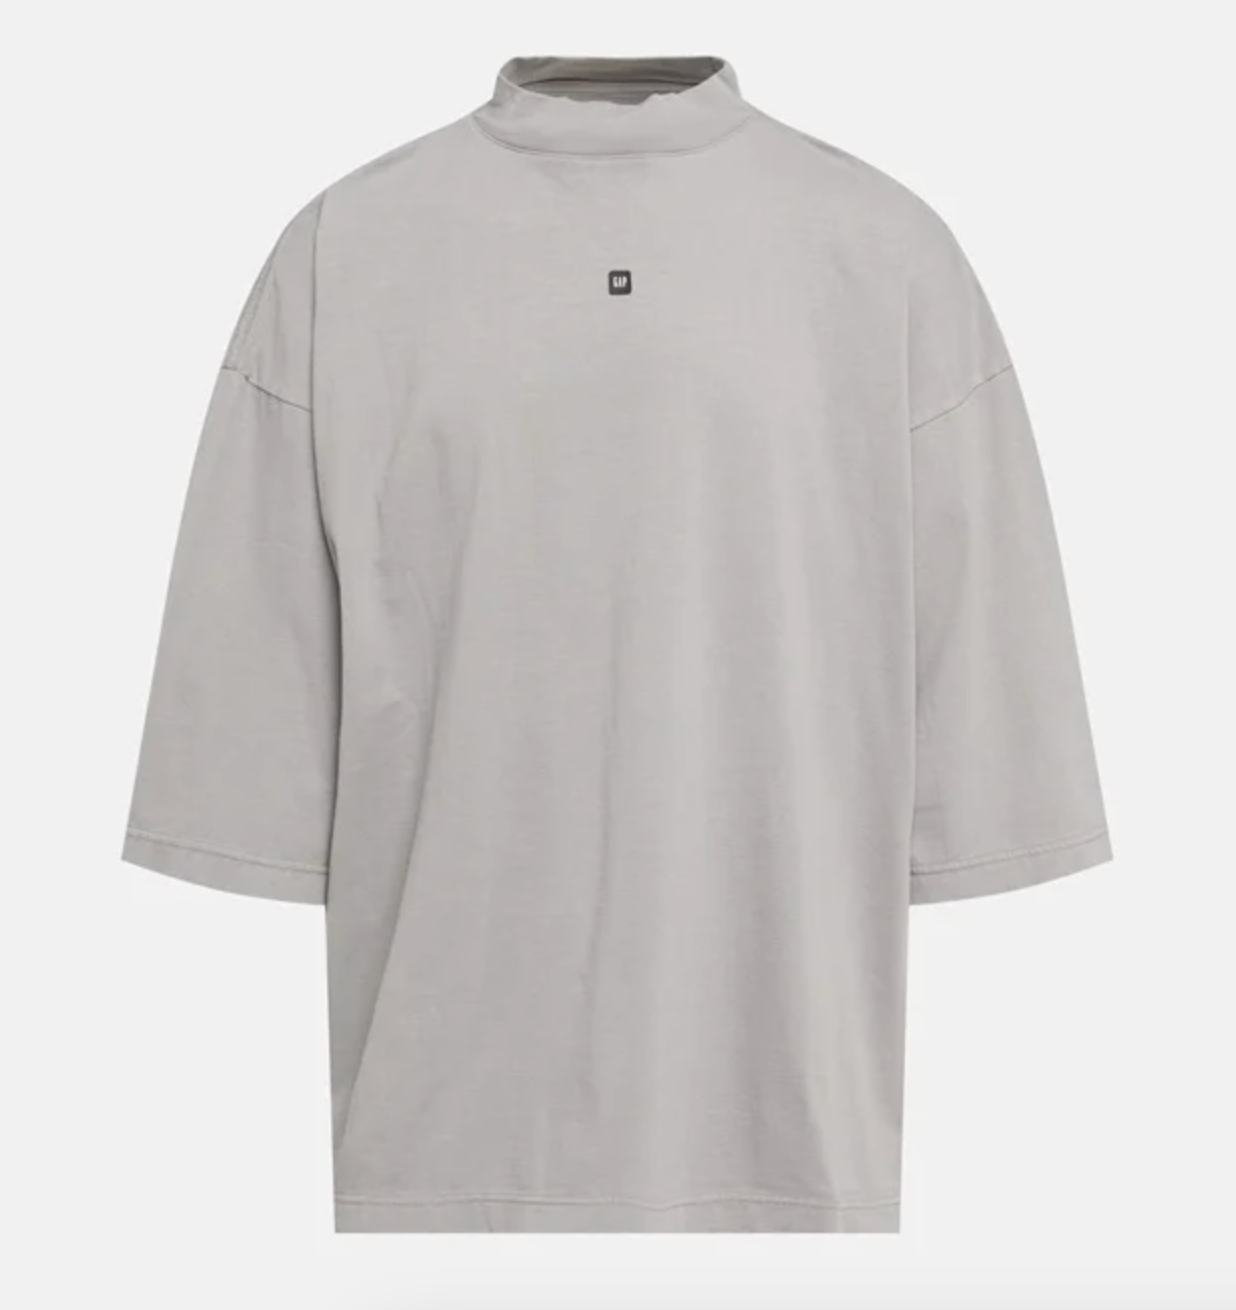 Yeezy Gap Engineered by Balenciaga T-Shirt 3/4 Dark Gray